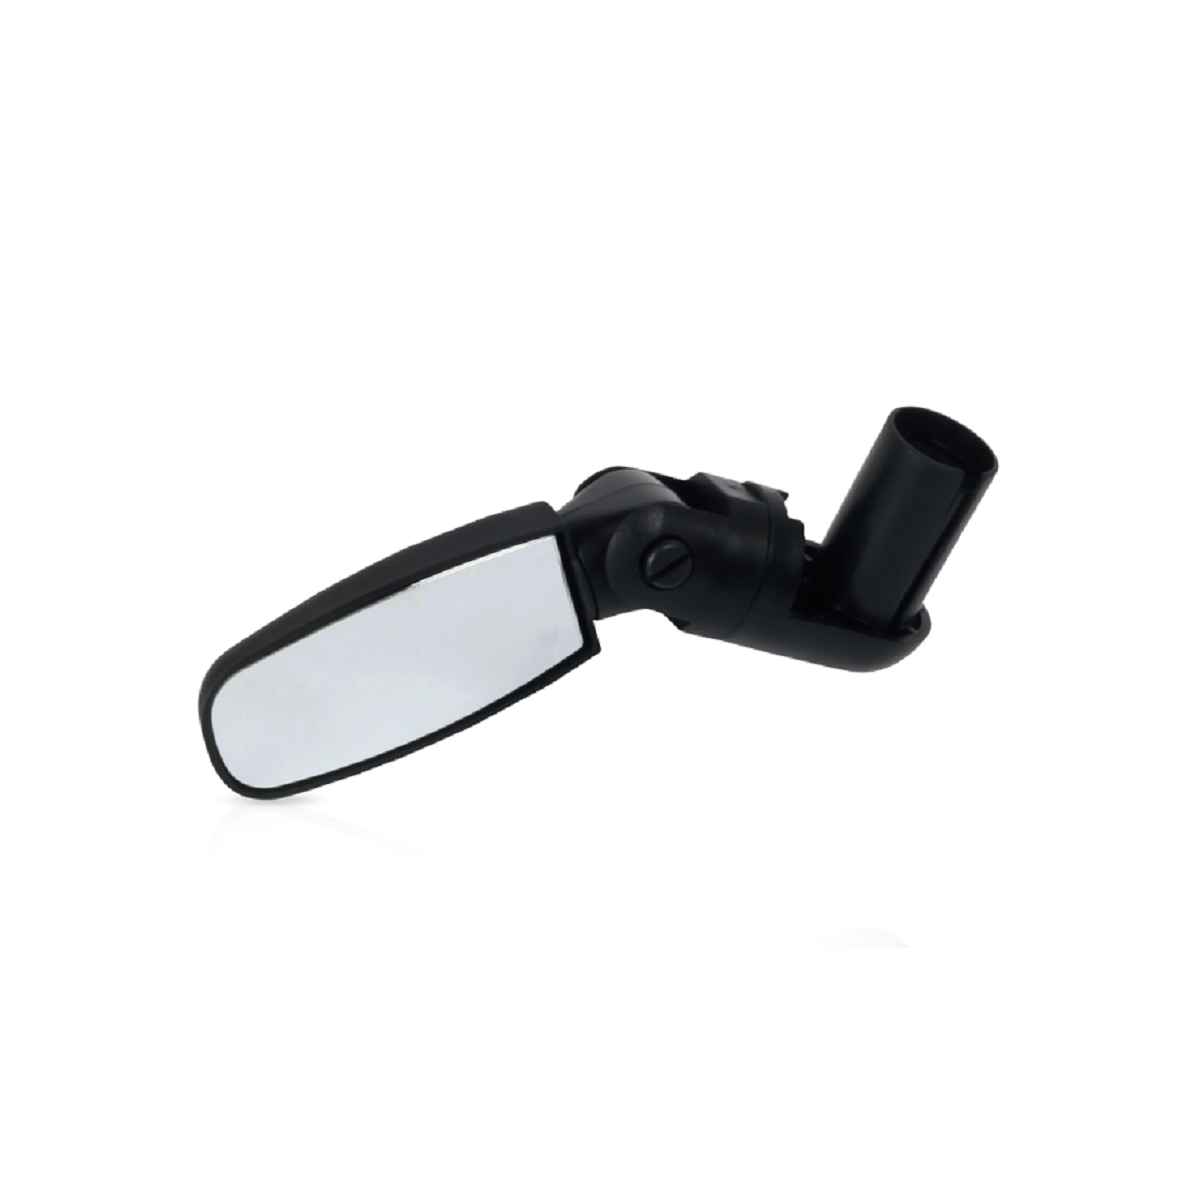 ZEFAL SPIN 15 mirror - black